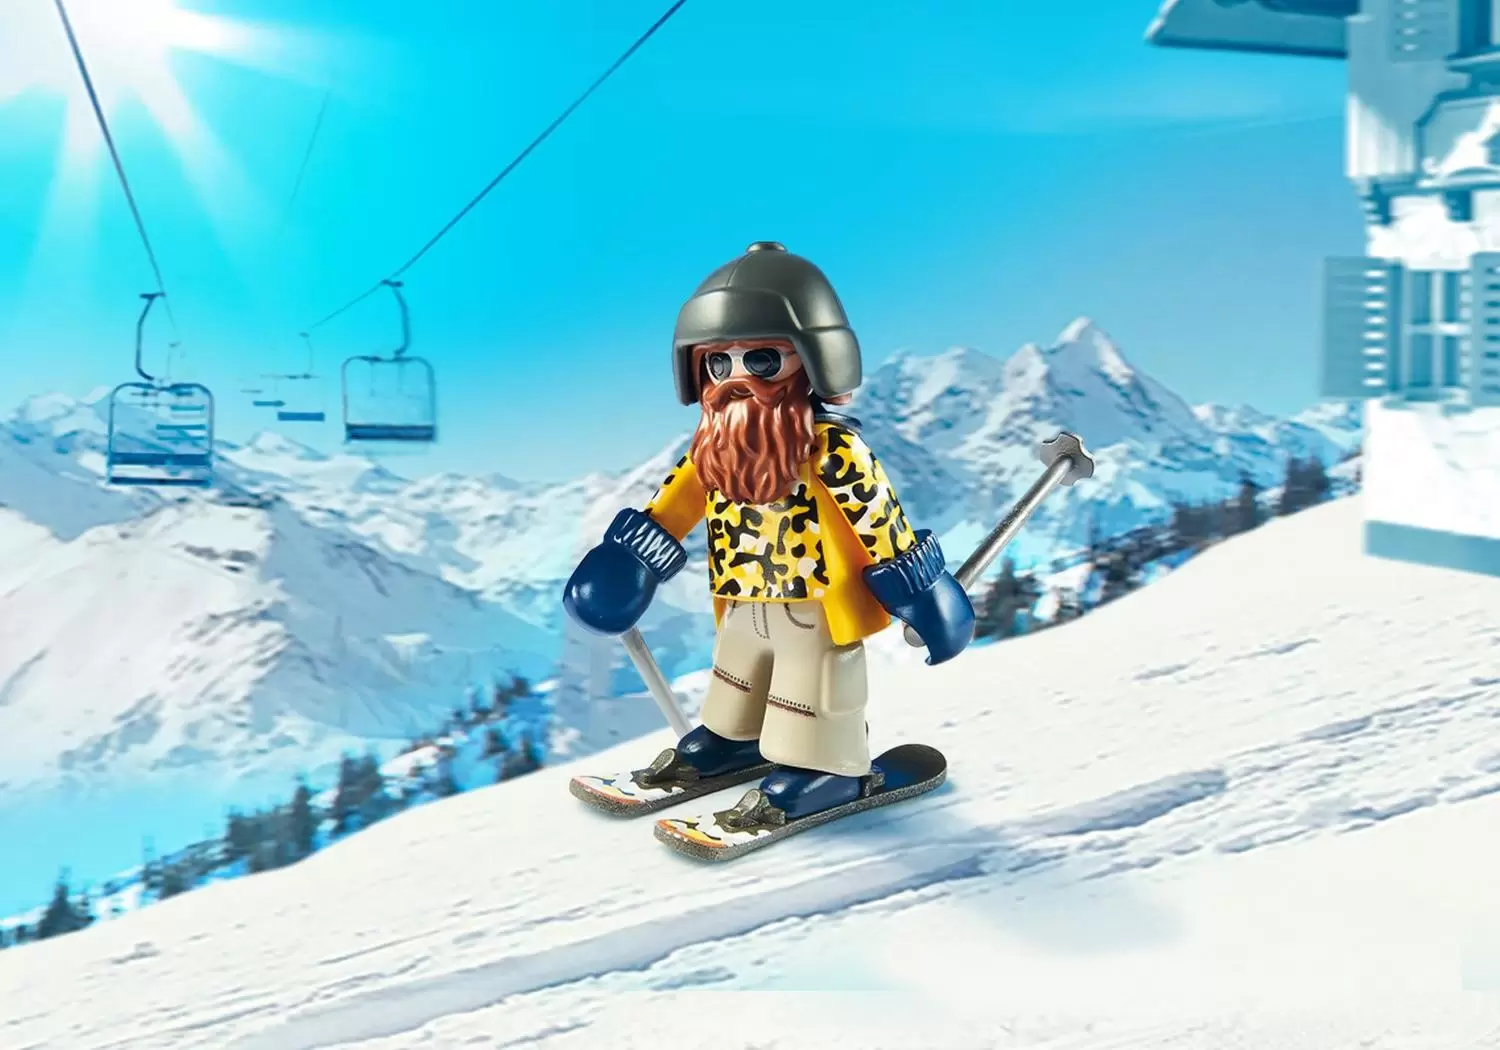 Recreational skiers - Playmobil Winter sports 9286